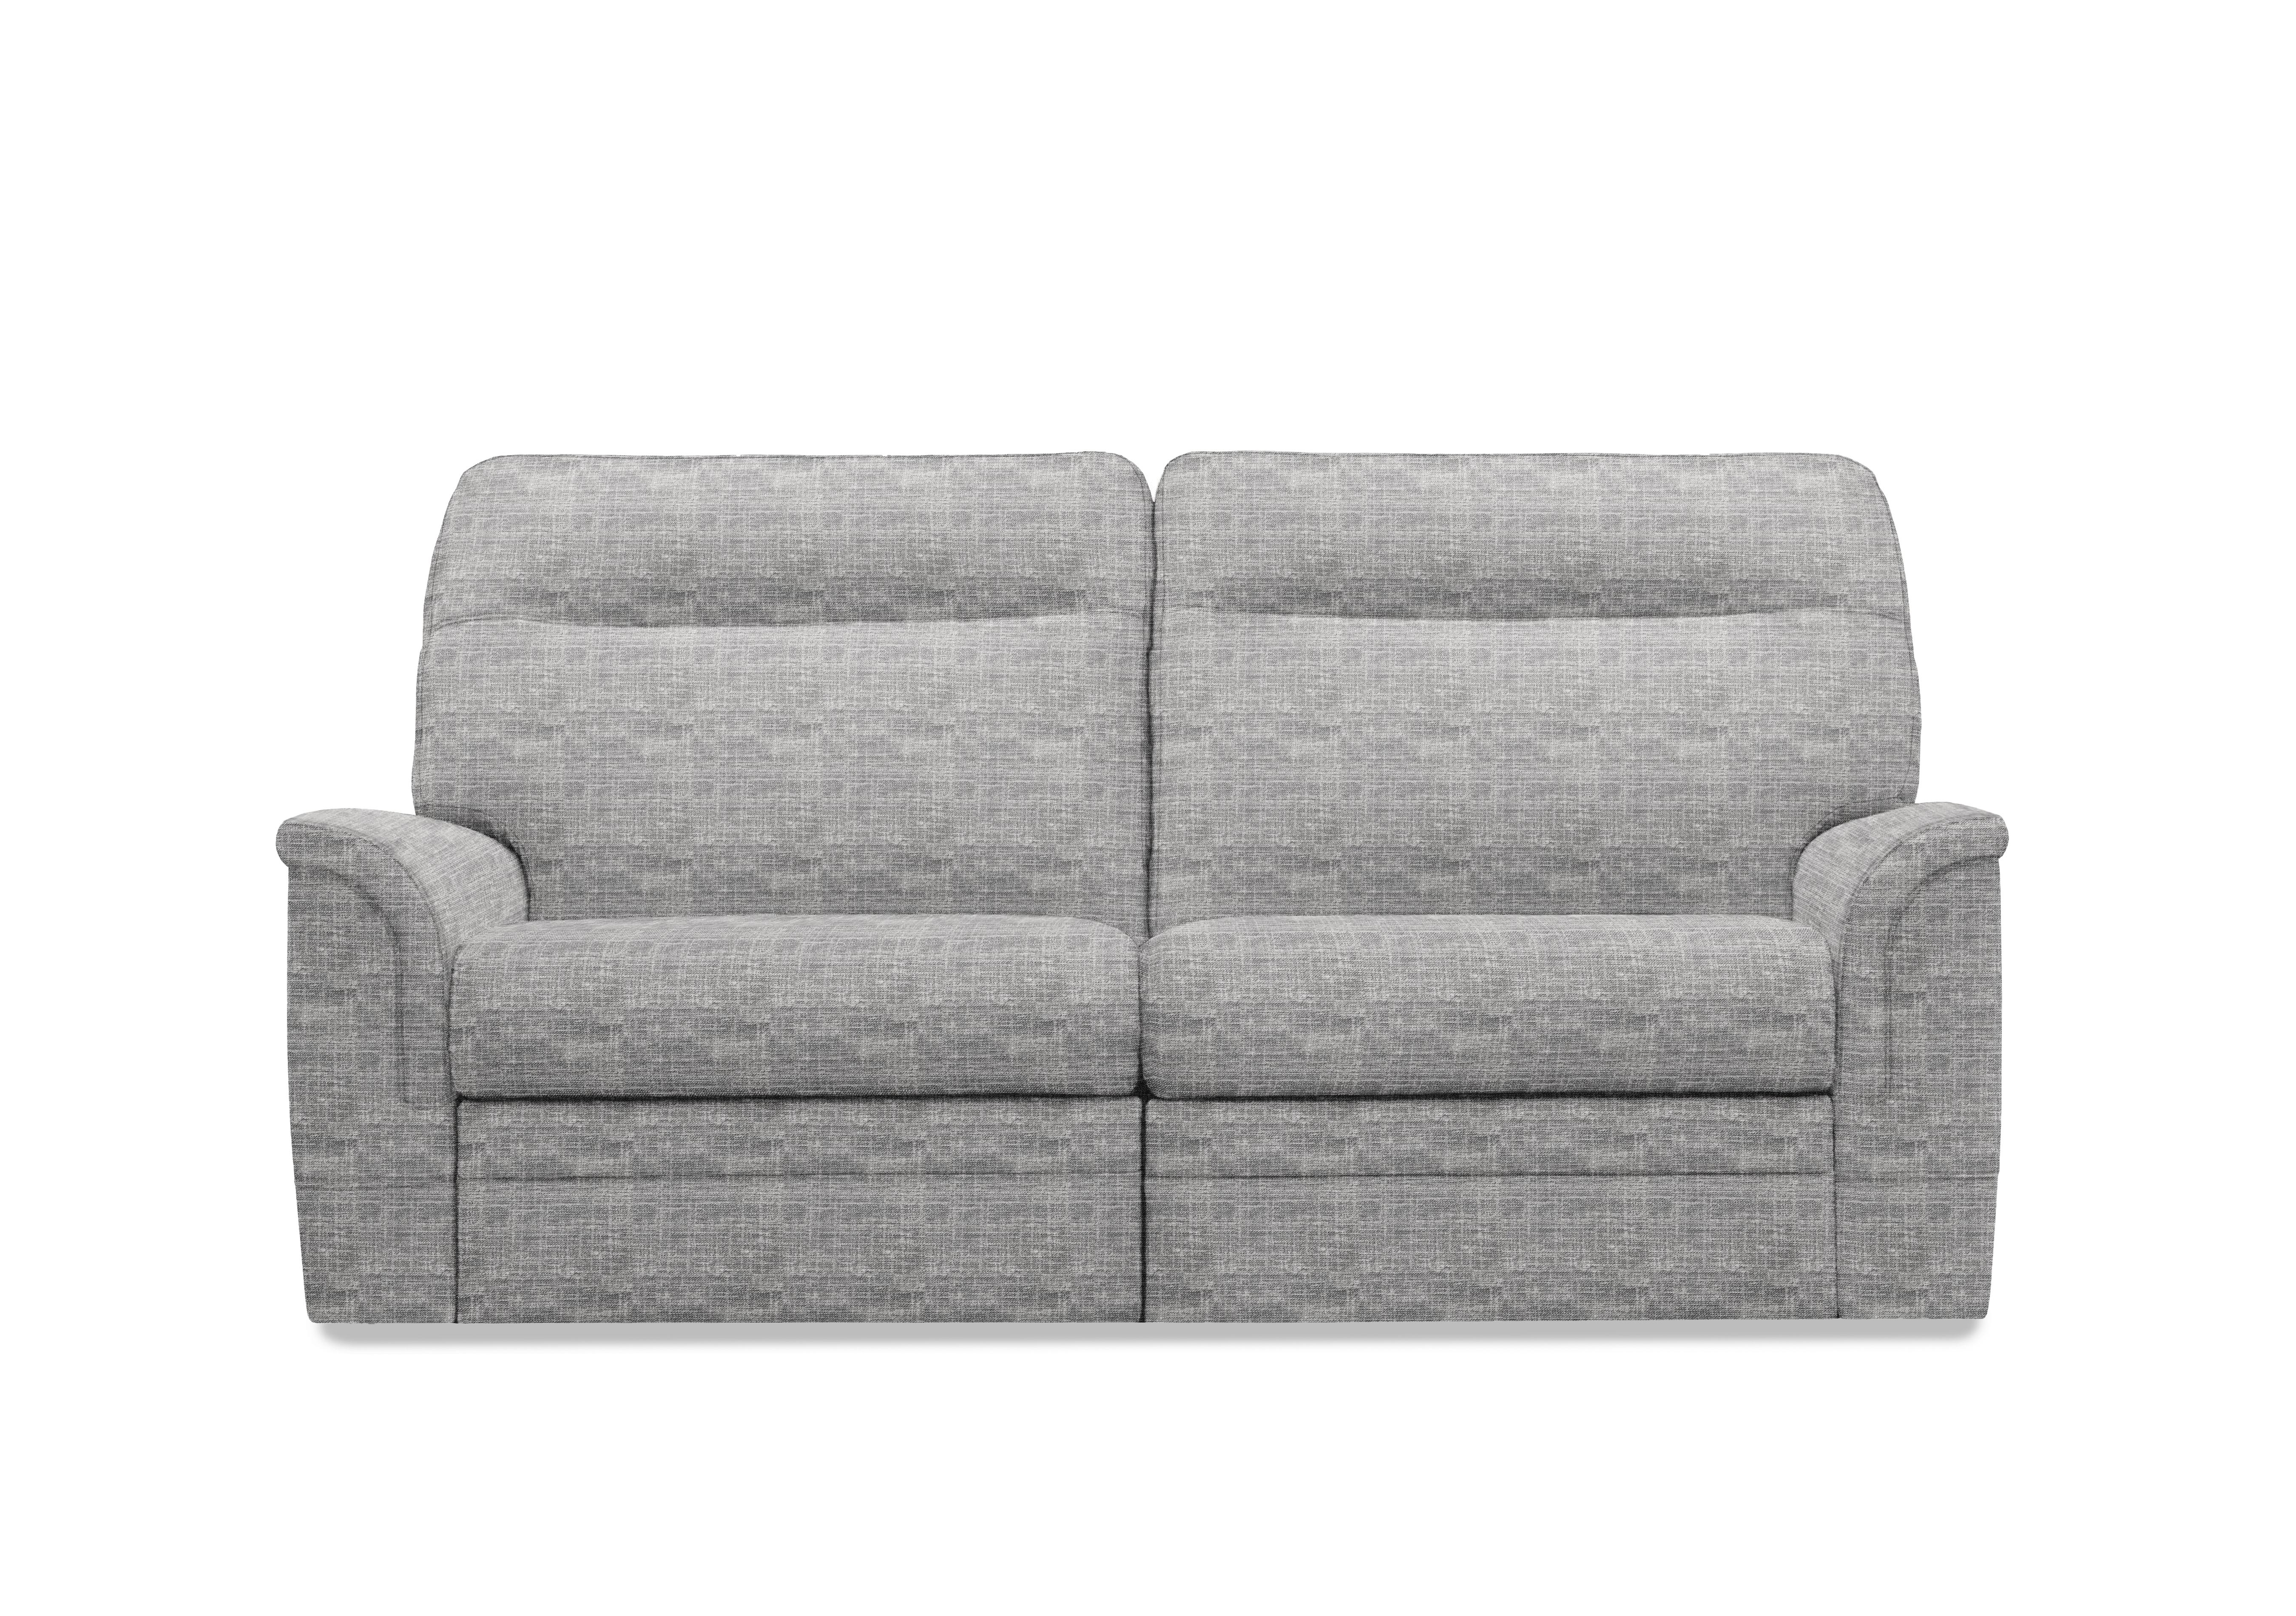 Hudson 23 Large 2 Seater Fabric Sofa in Dash Stone  001497-0040 on Furniture Village